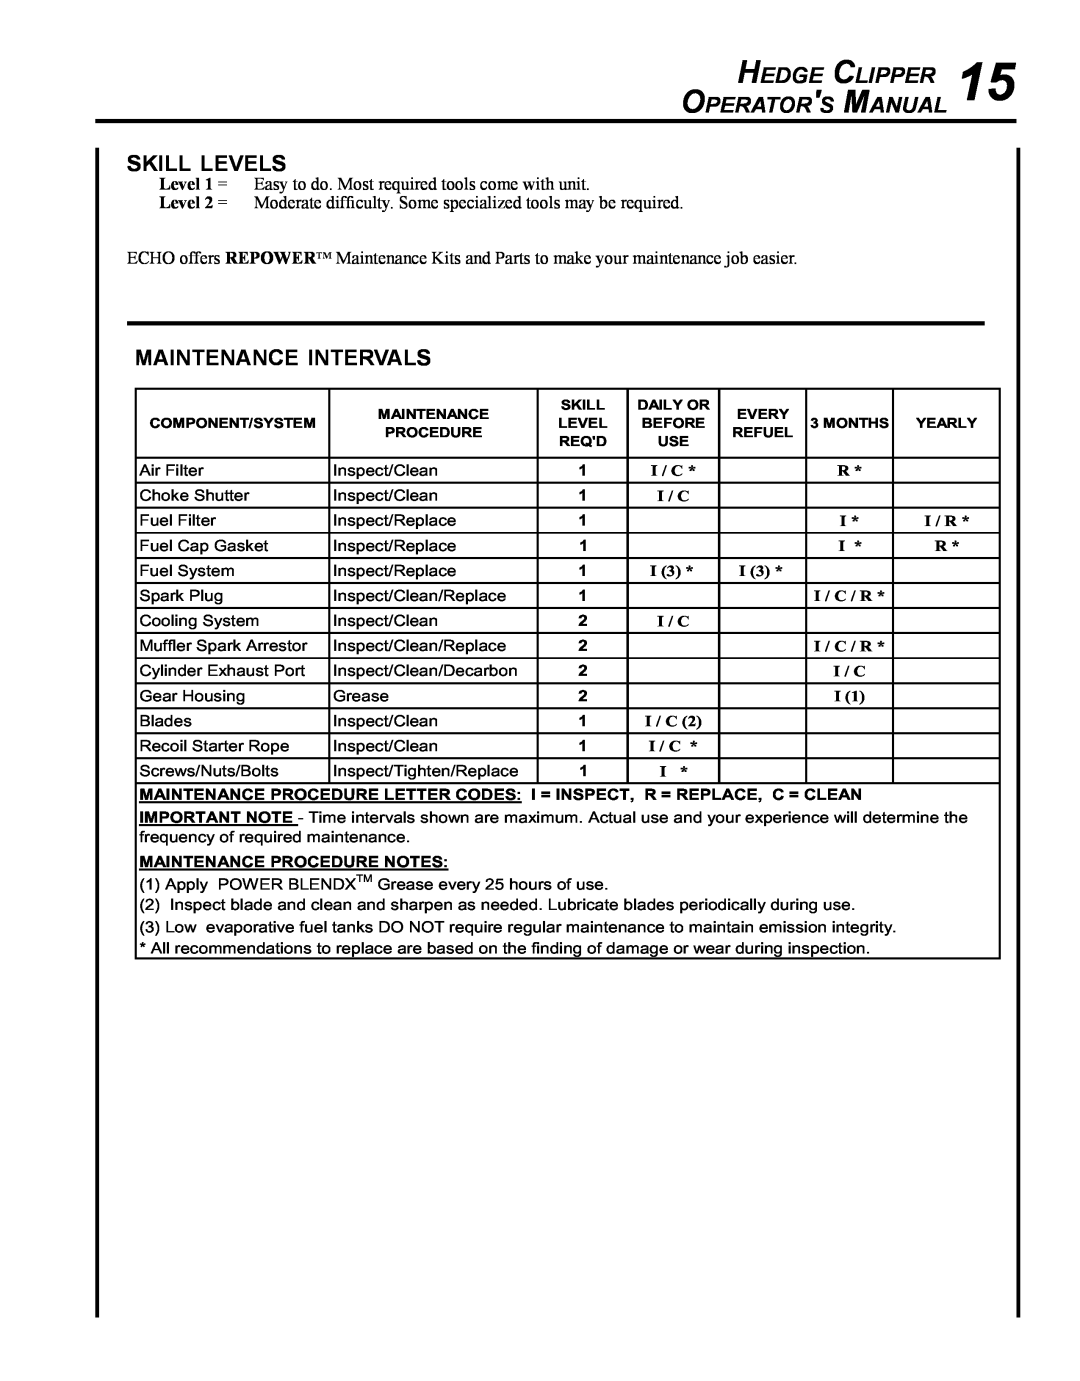 Echo HC-235 manual skill levels, maintenance intervals, Hedge Clipper Operators Manual, I / R, I / C / R 